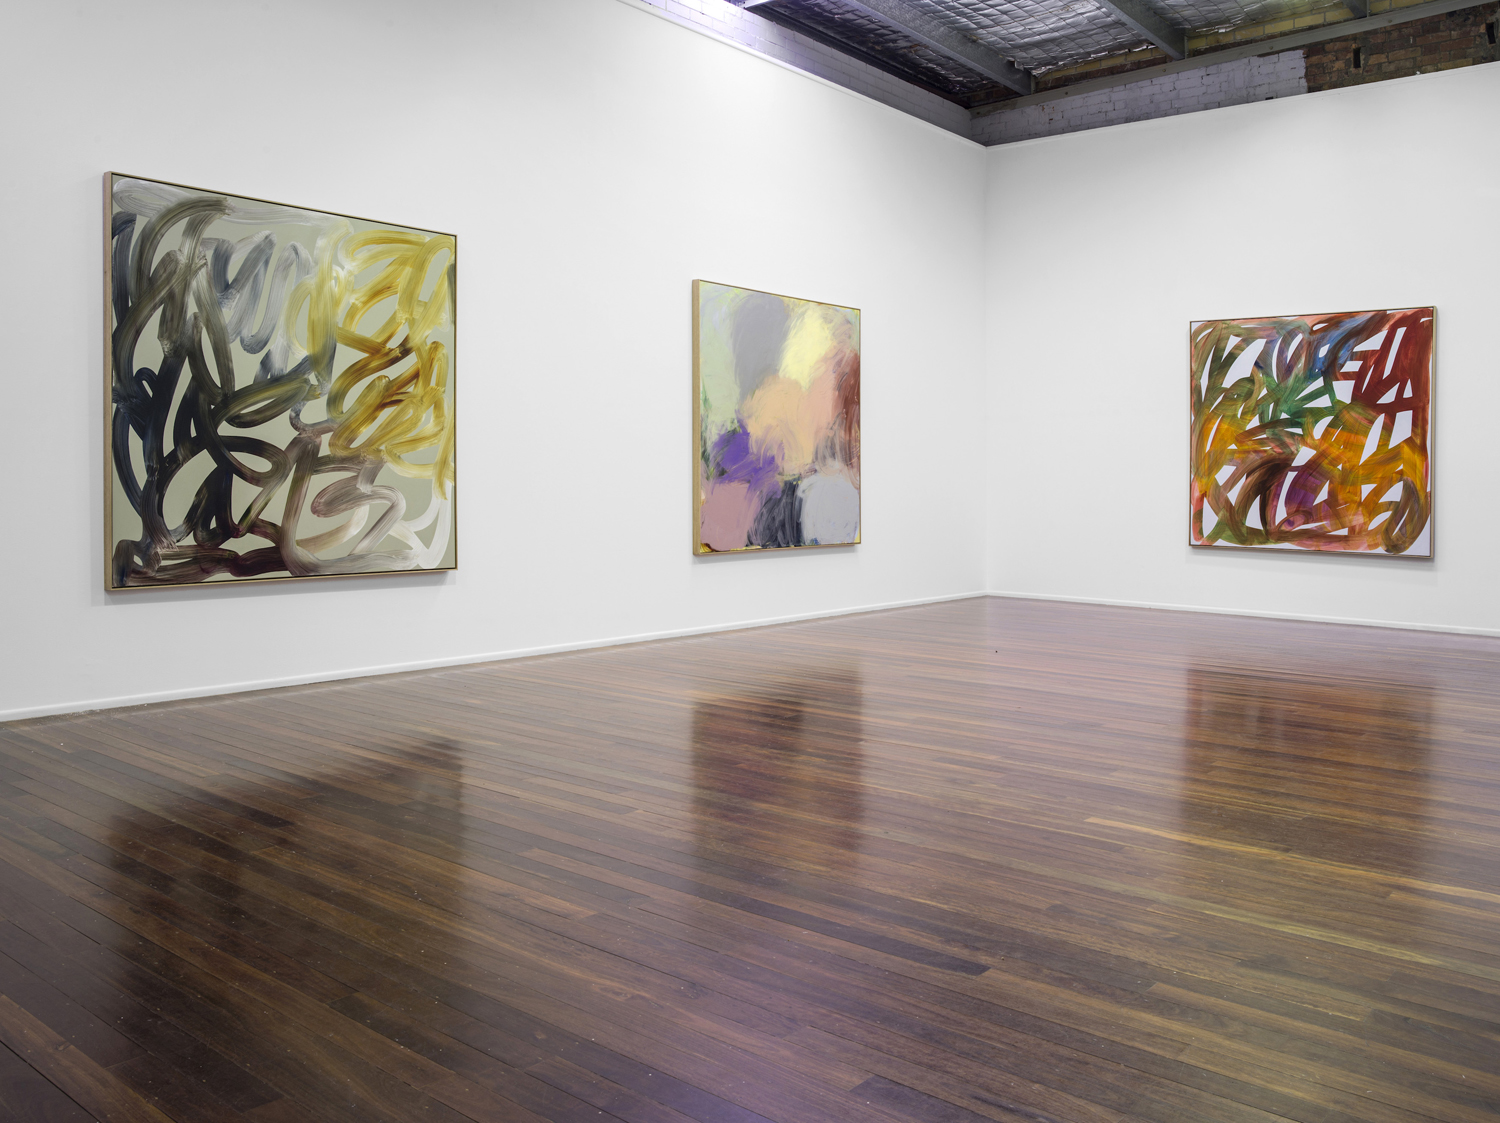   'Paintings'&nbsp; 2017  Milani Gallery, Brisbane  Installation view 